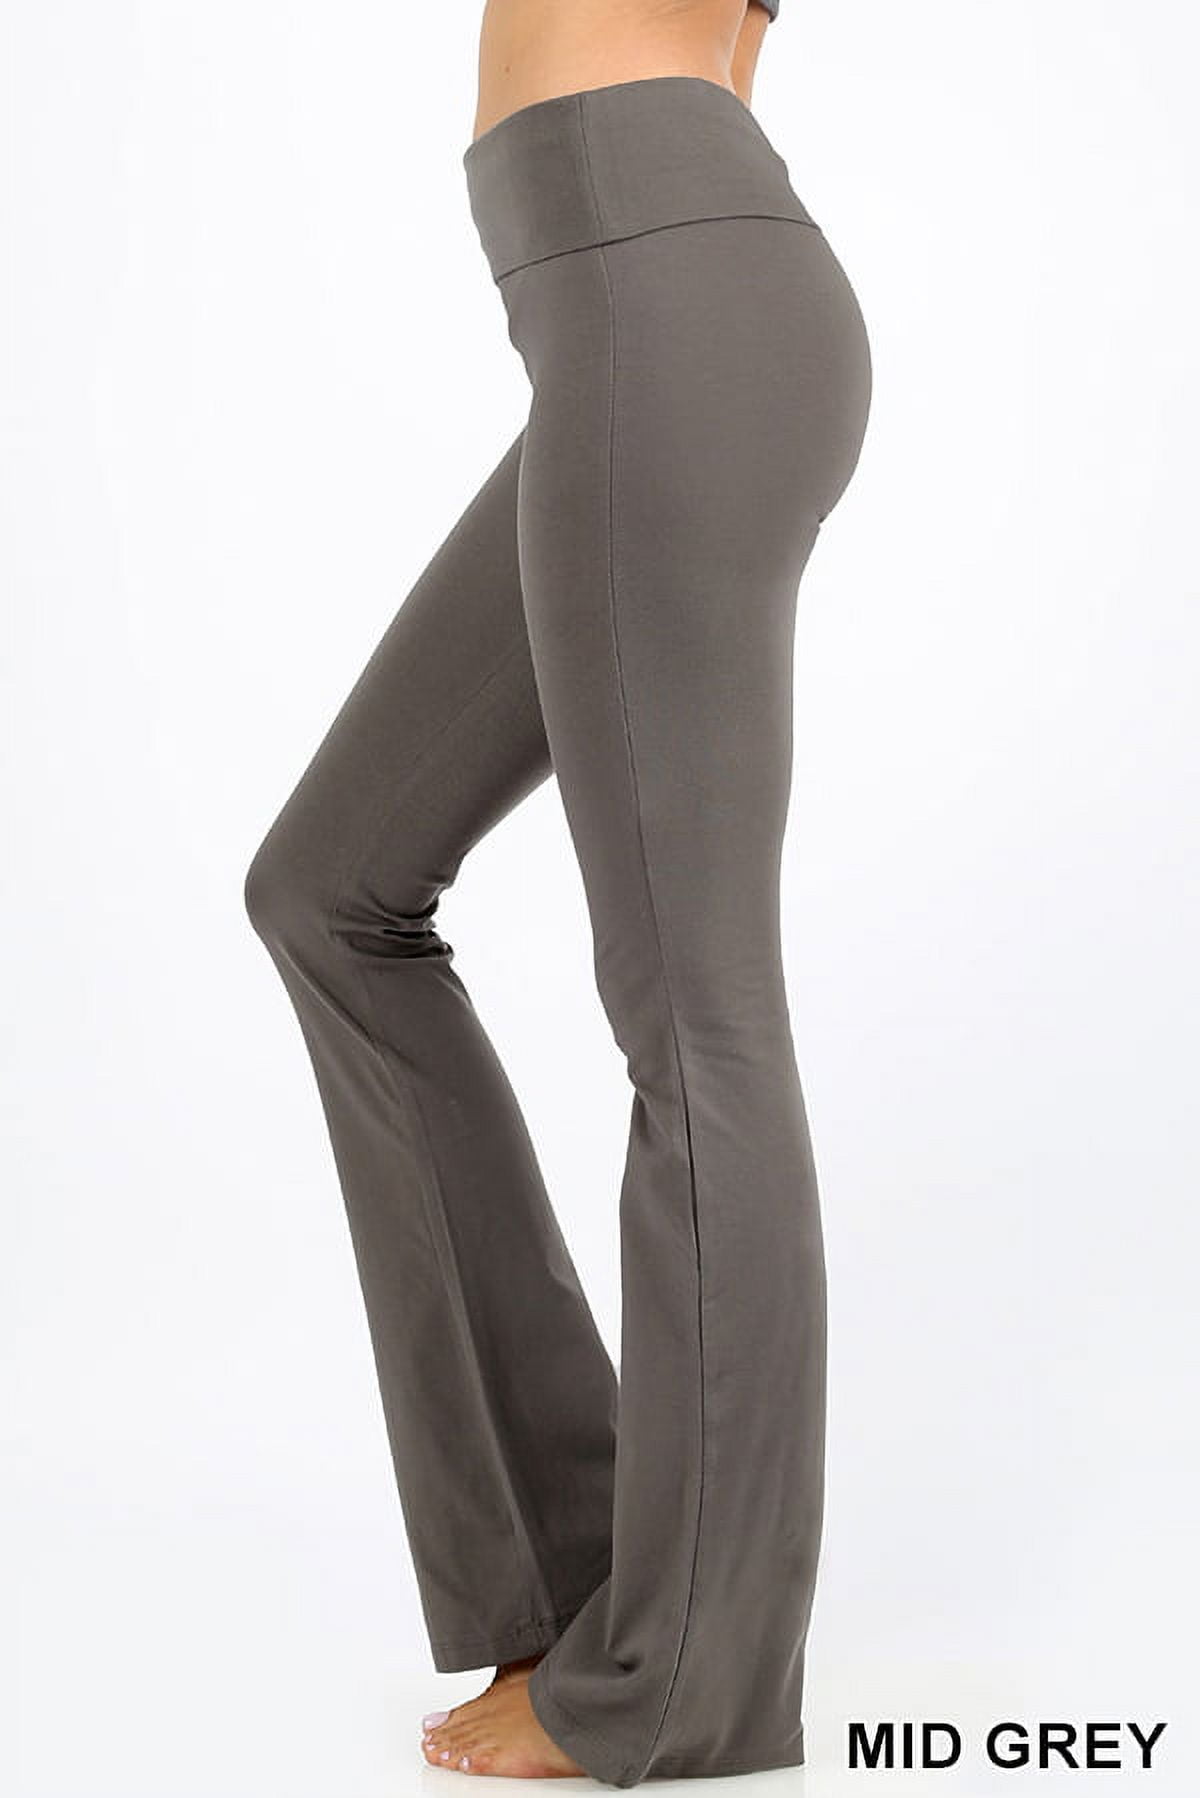 Premium Cotton Fold-Over Yoga Flare Pants Everyday Leggings